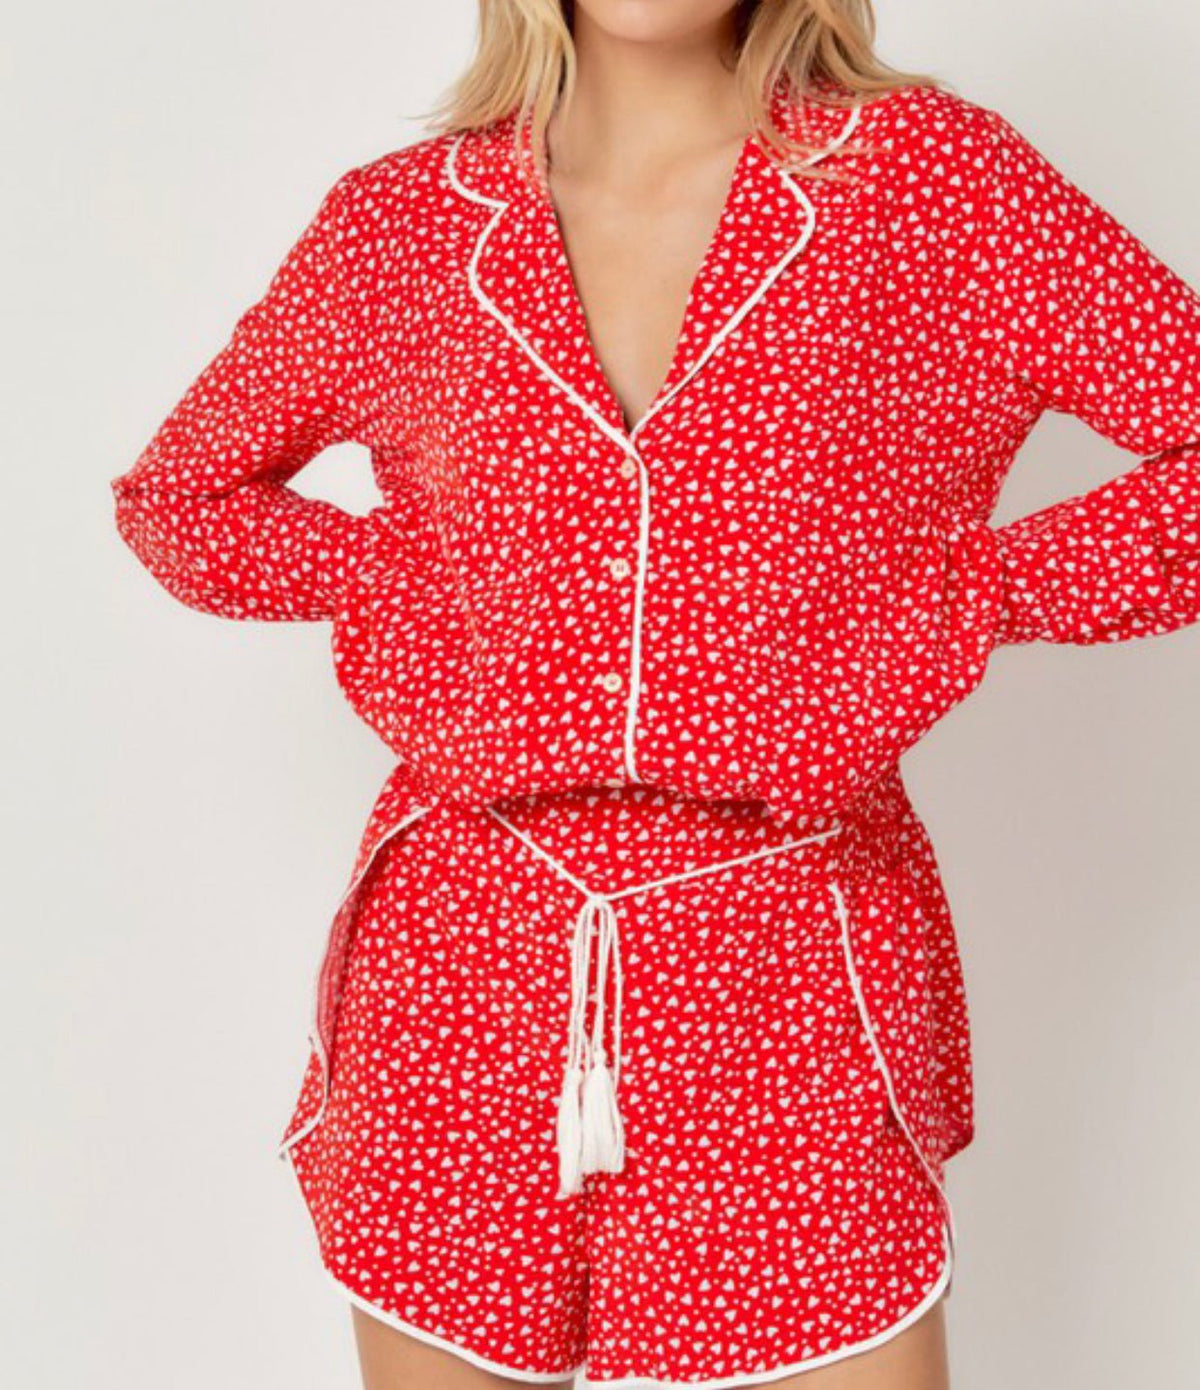 Women Pajama Set Red Hearts Love Luxury Nightwear Pjs Clothing